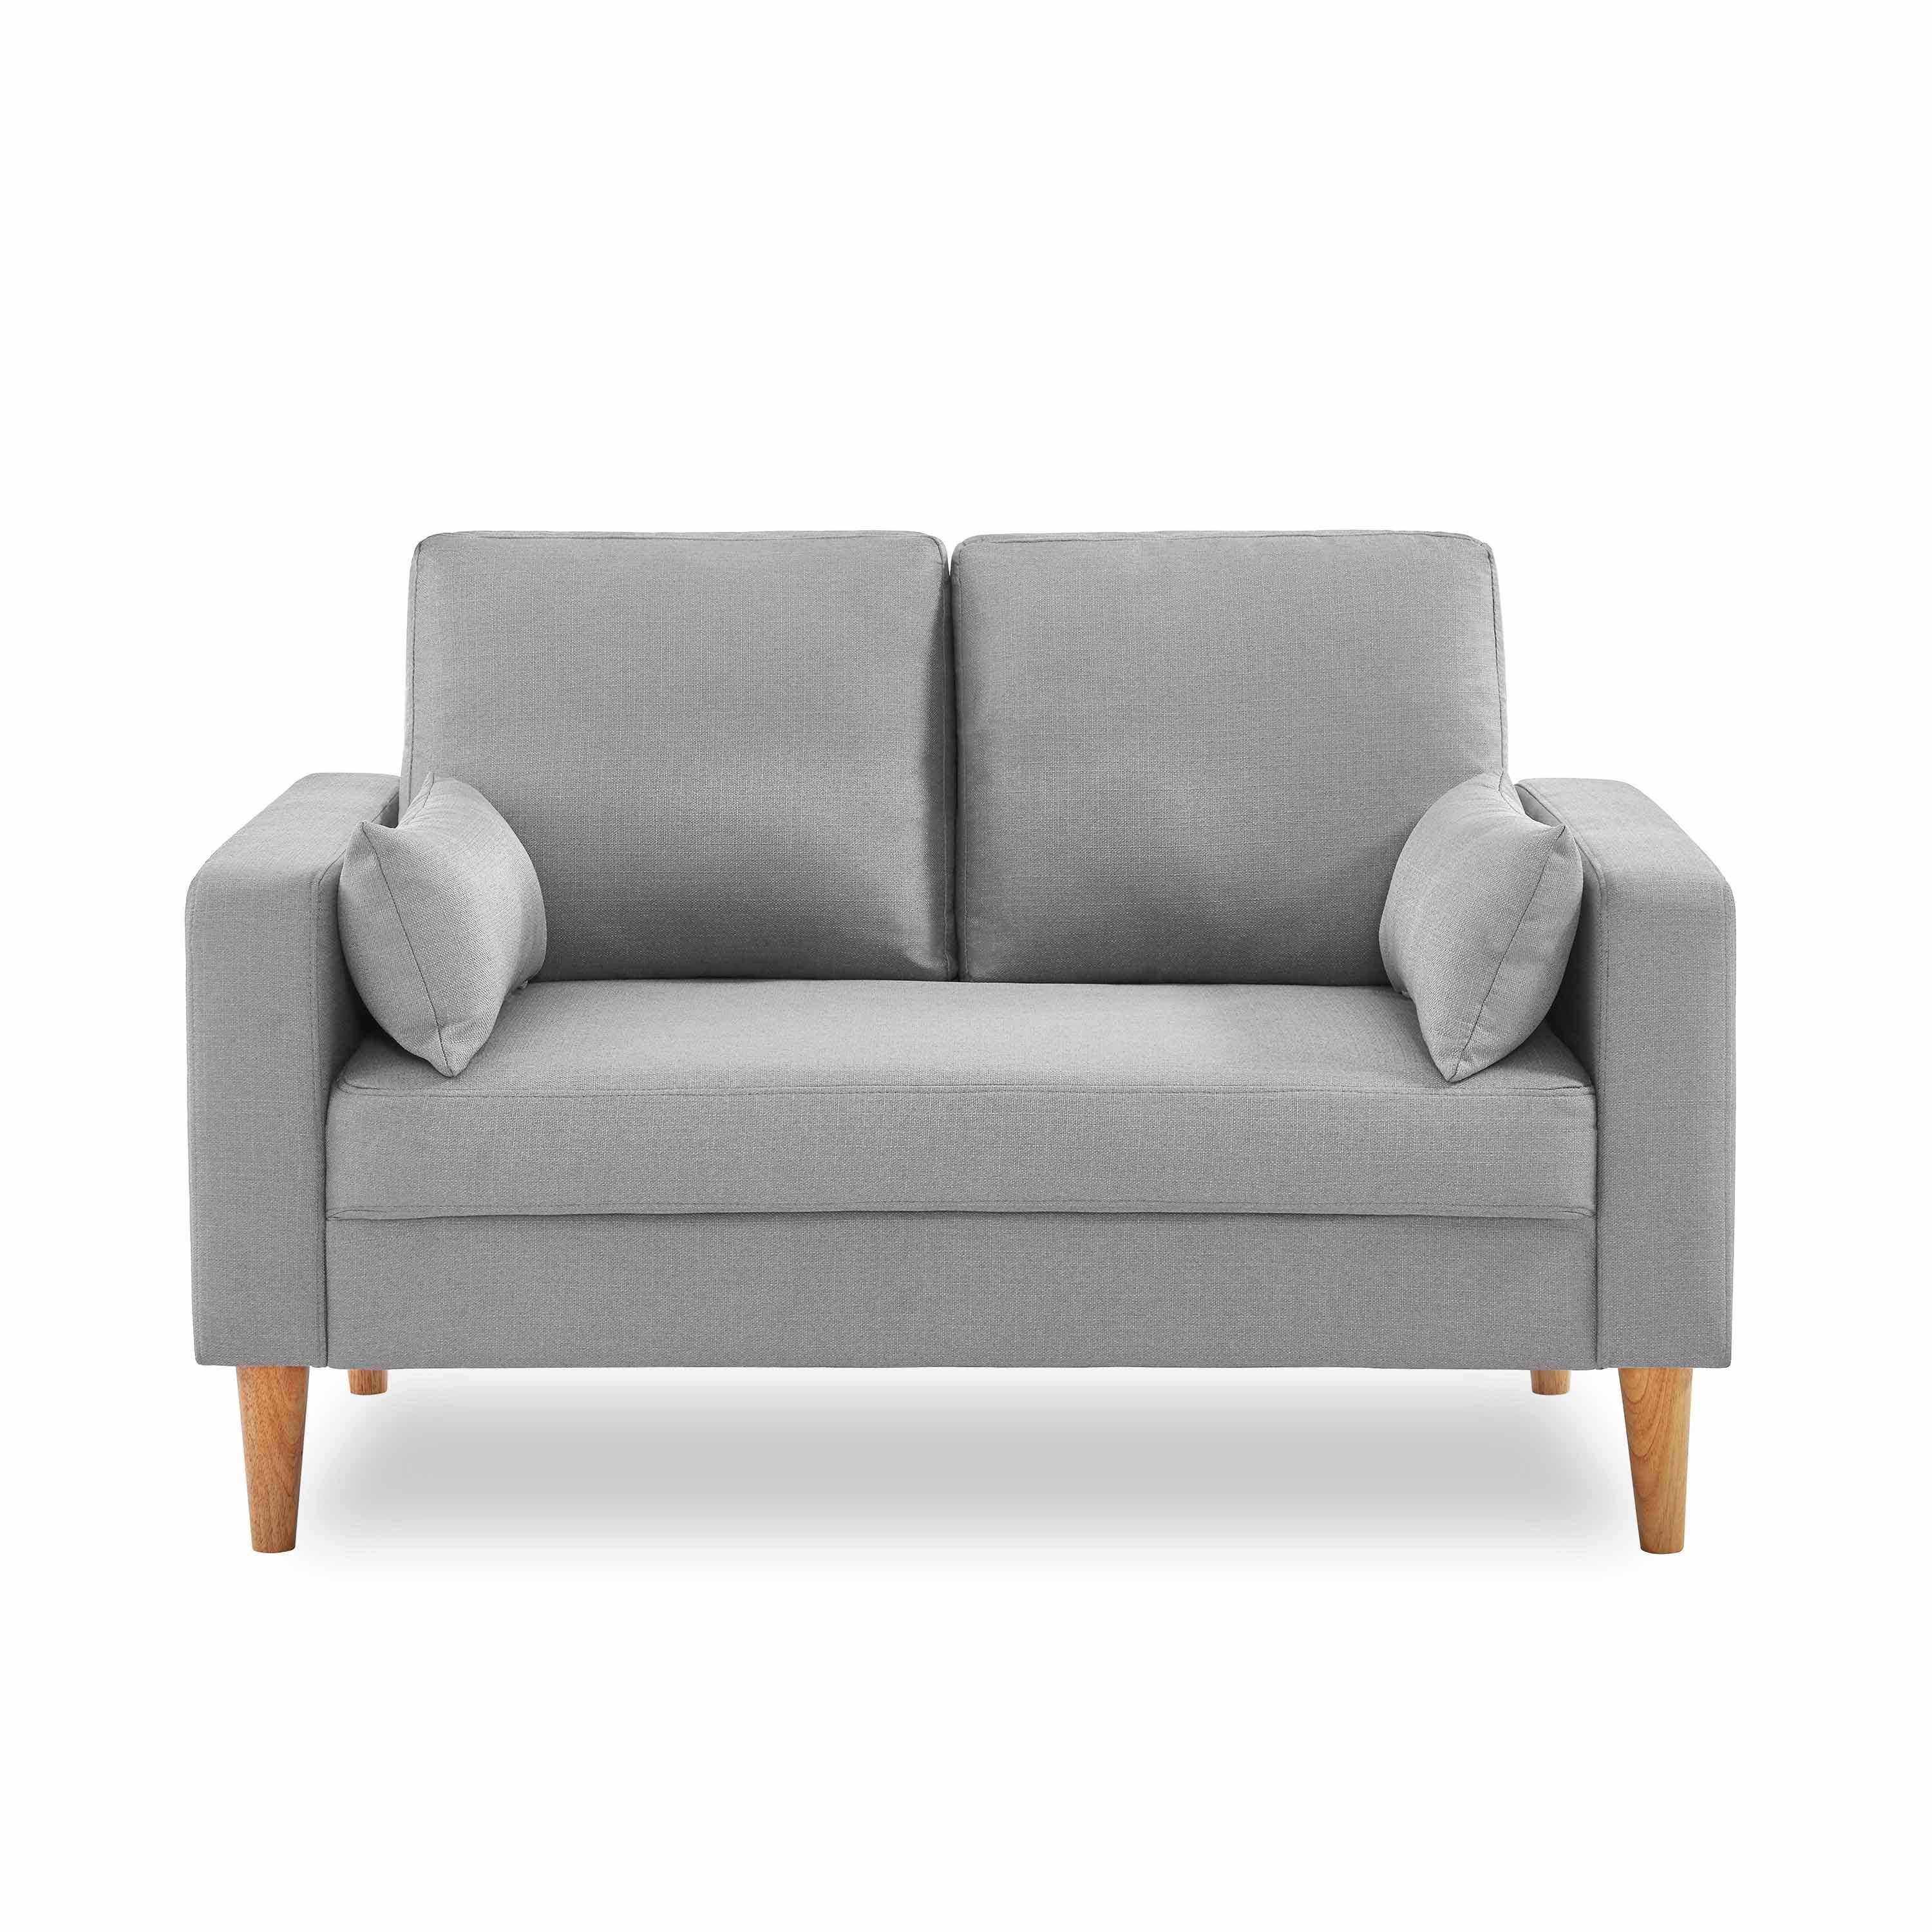 Medium 2-seater sofa Scandi-style with wooden legs - Bjorn - Light Grey,sweeek,Photo3